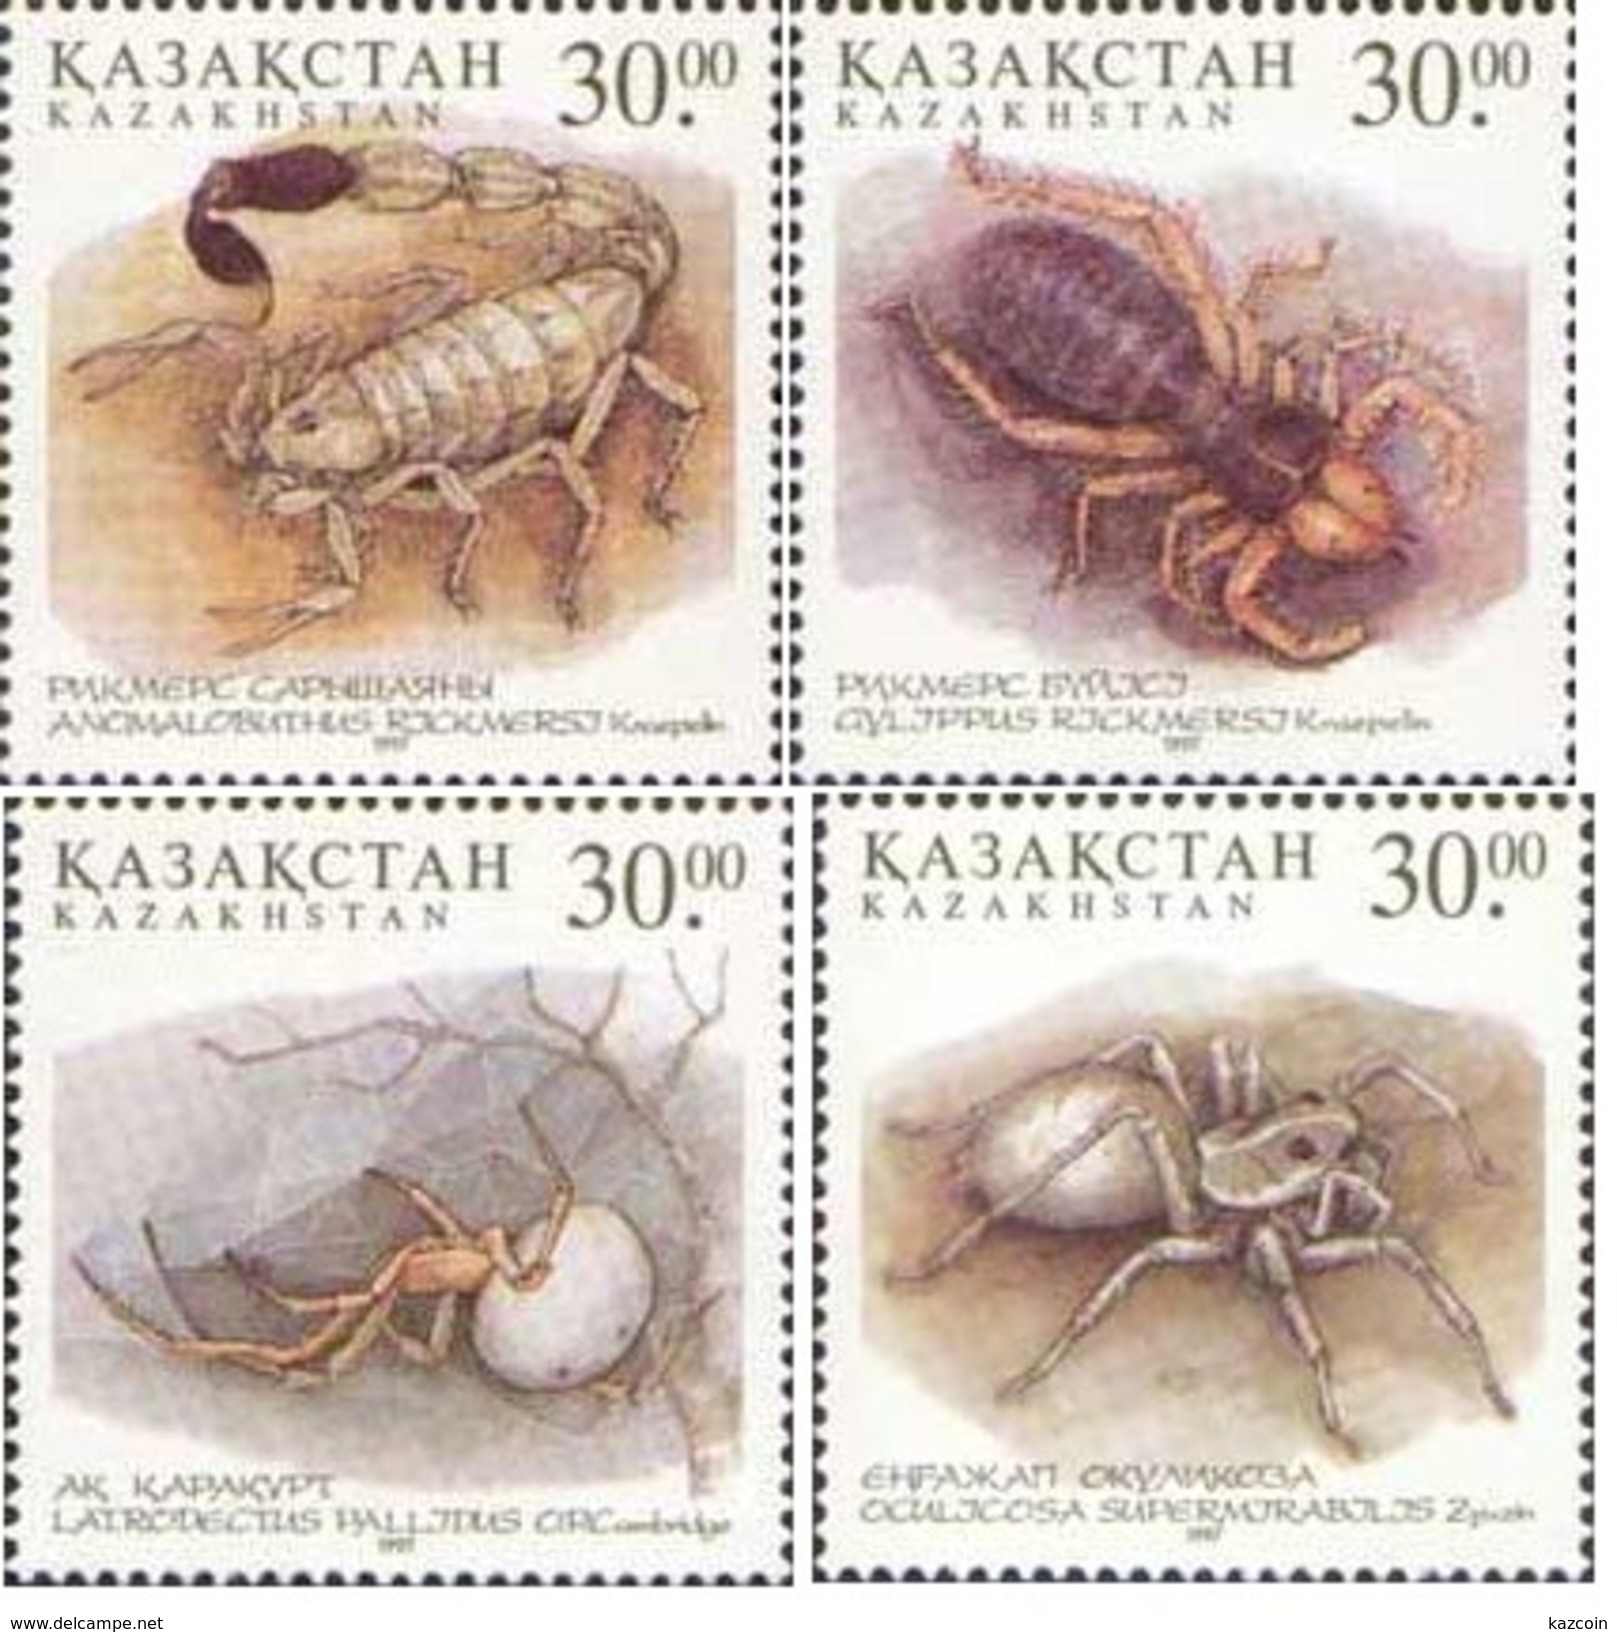 1997 Kazakhstan Kasachstan - Venomous Insects - Spiders, Scorpion - Spinnen